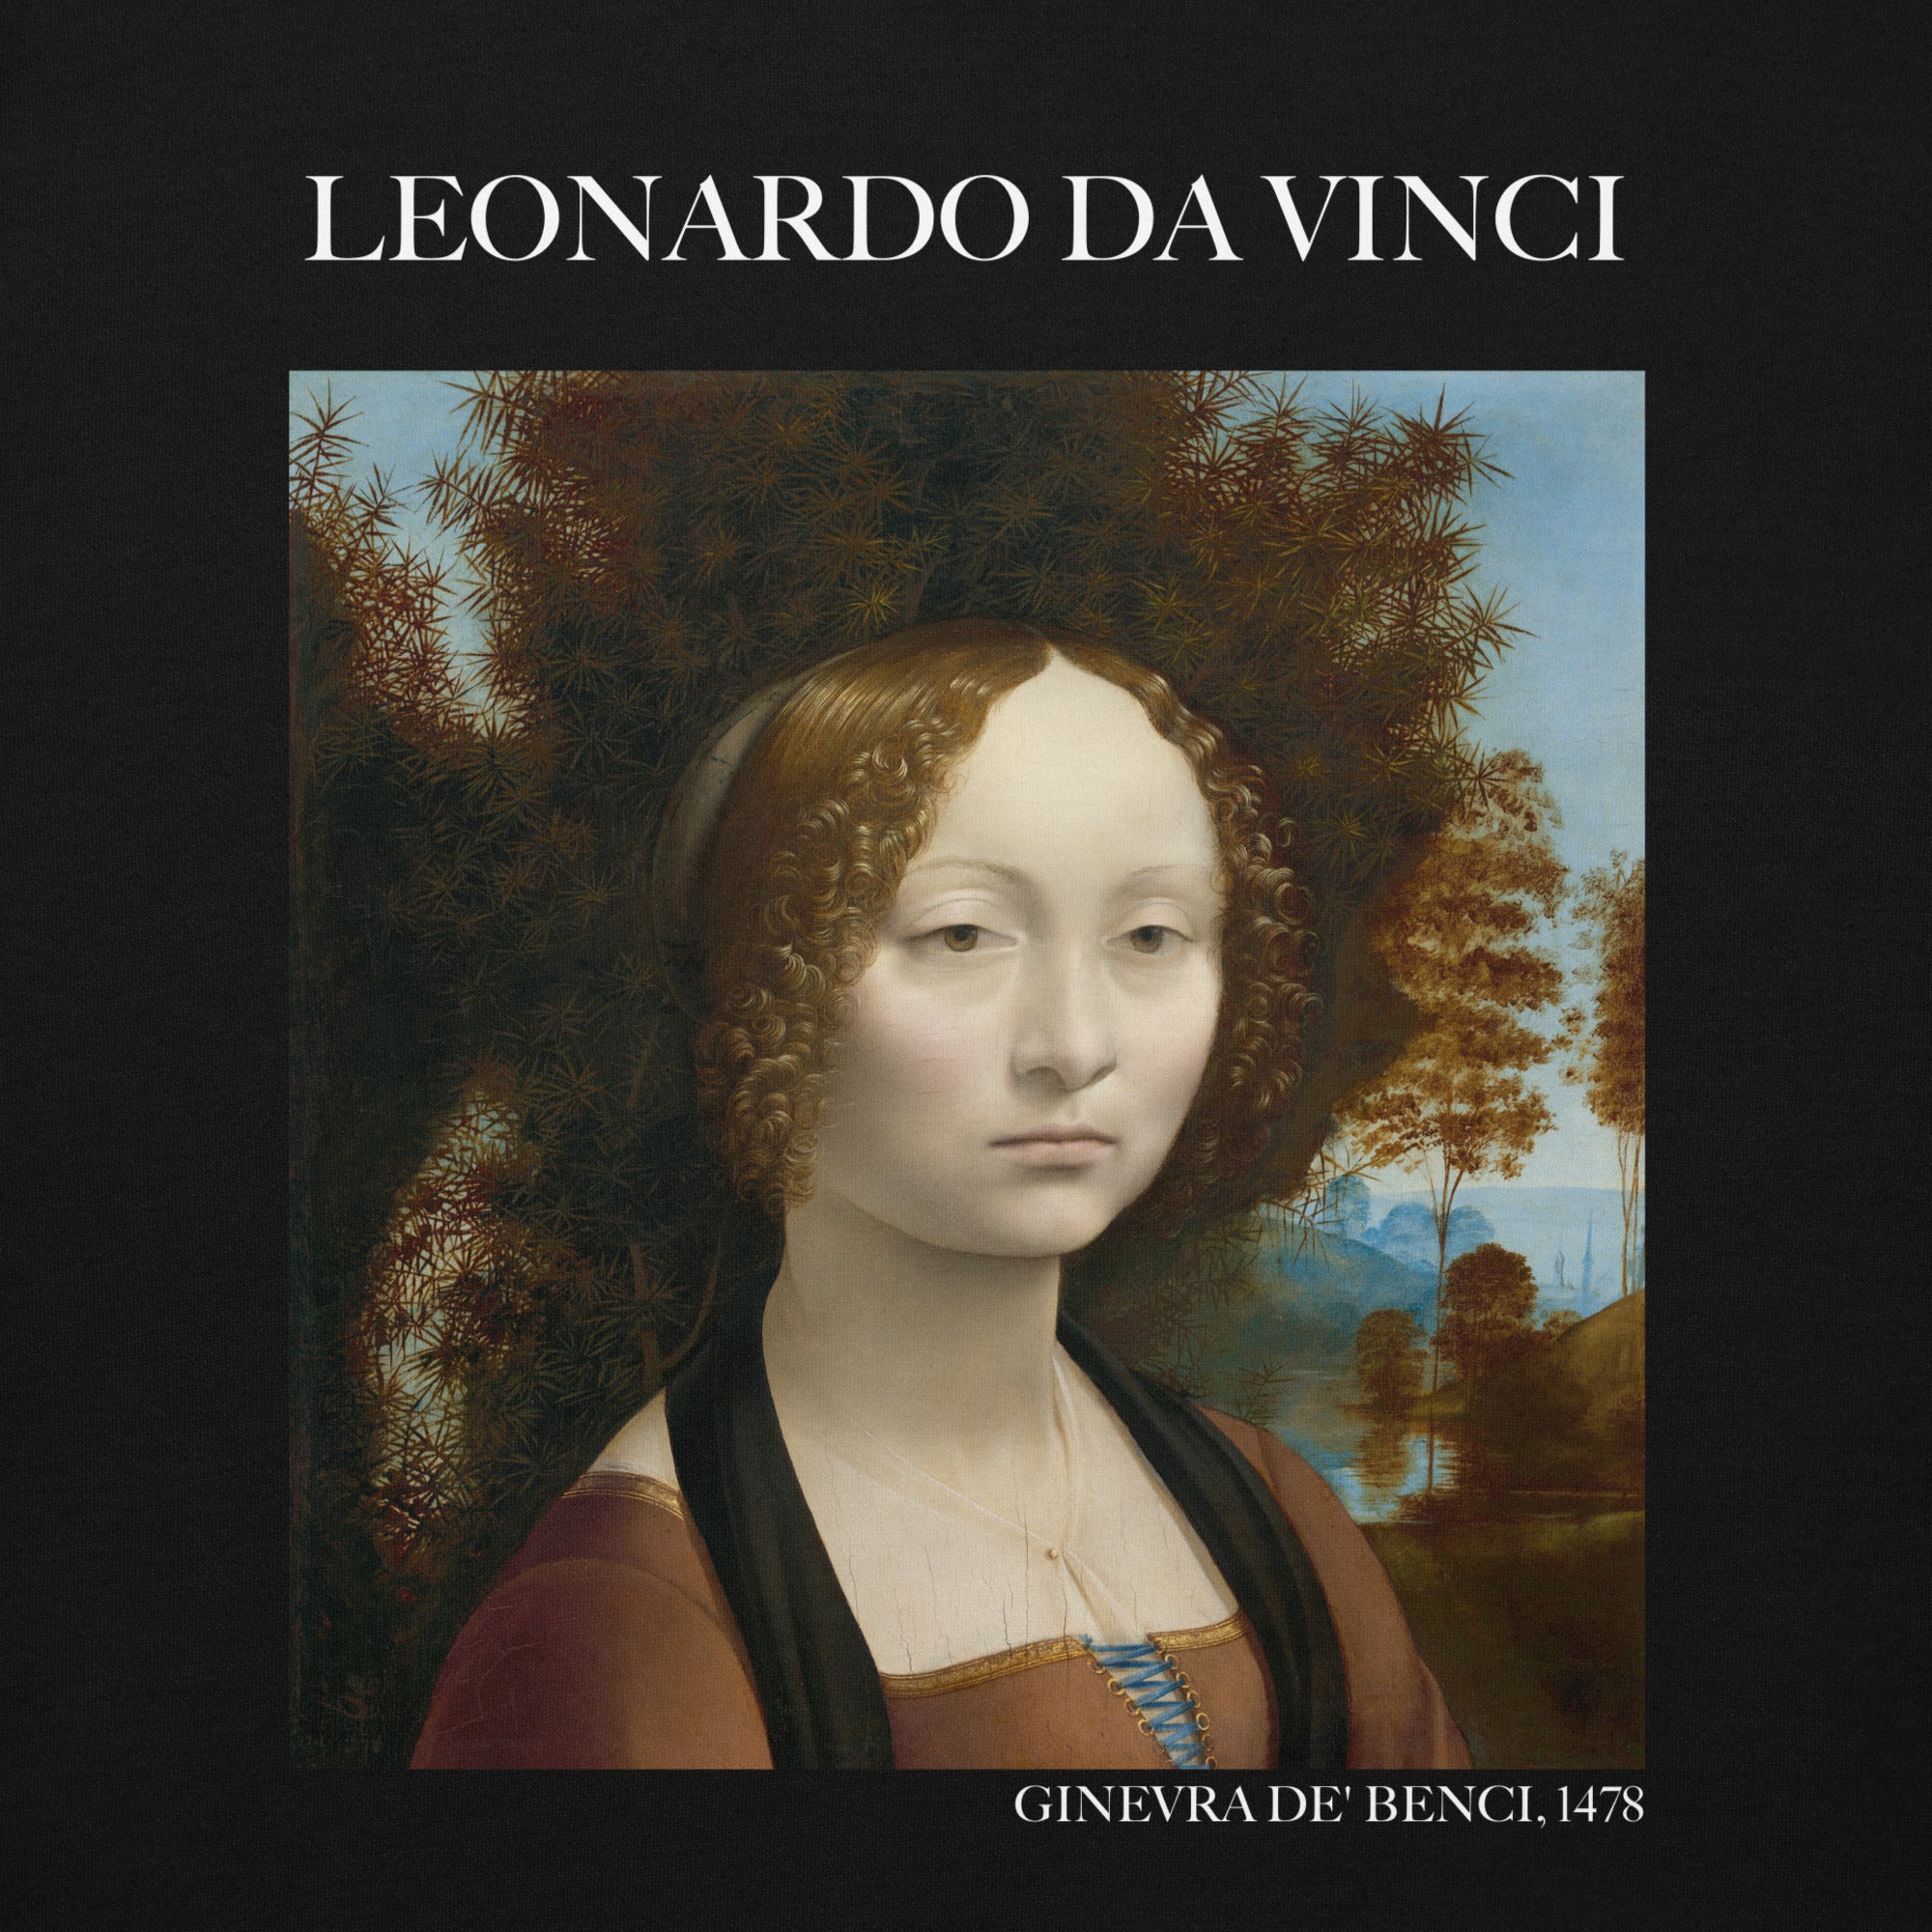 Kapuzenpullover mit berühmtem Gemälde „Ginevra de‘ Benci“ von Leonardo da Vinci | Unisex-Kapuzenpullover mit Premium-Kunstmotiv